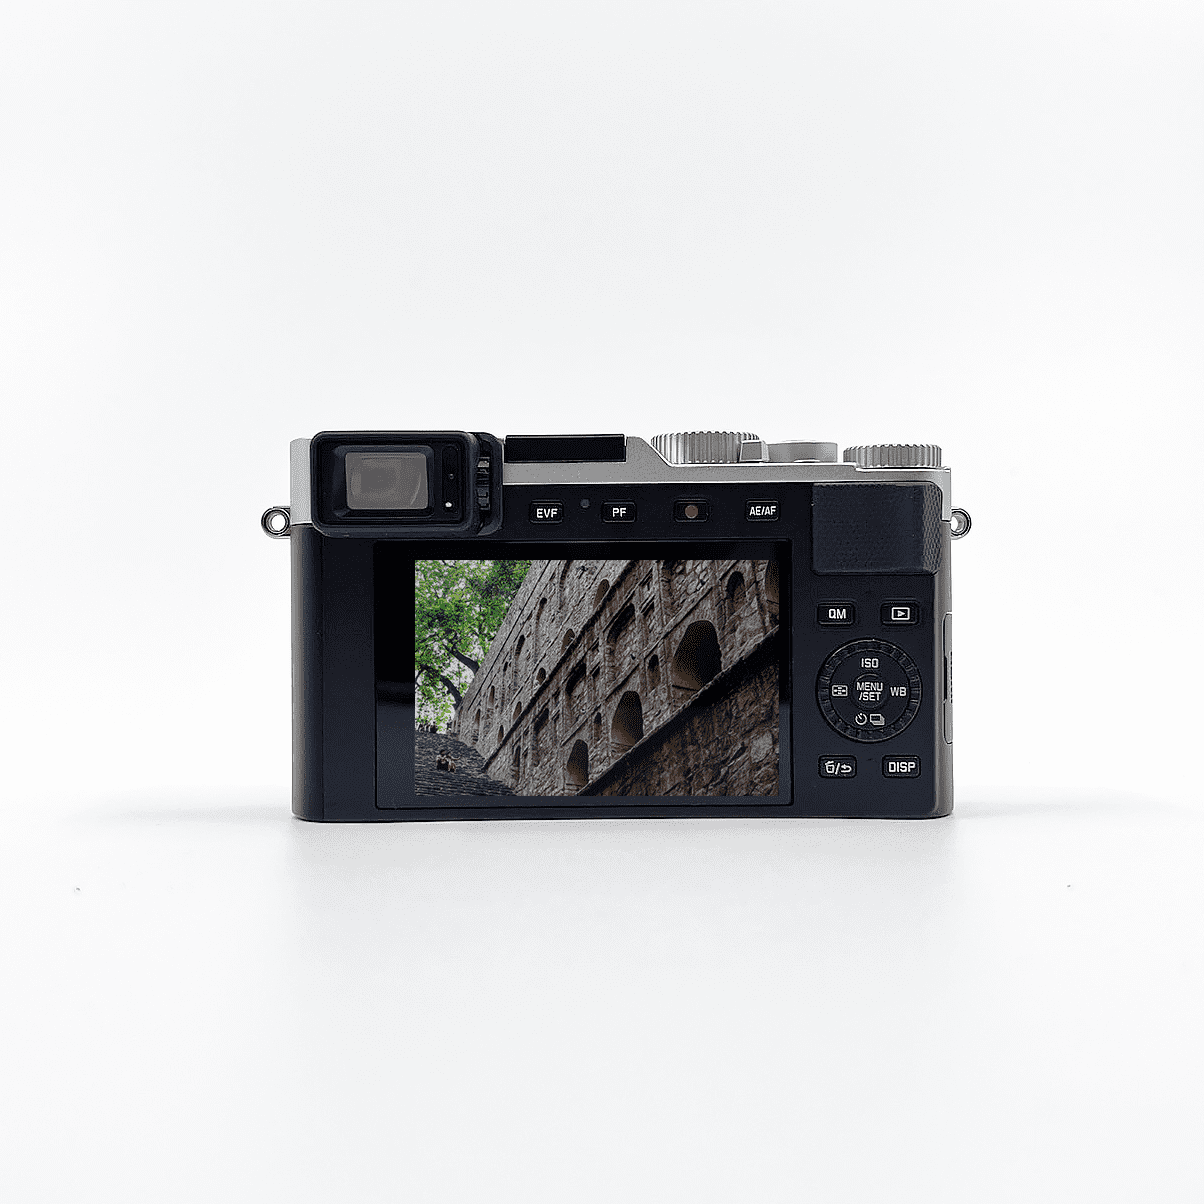 Leica D-LUX7 Compact Digital Camera - Black [Near Mint] #395A